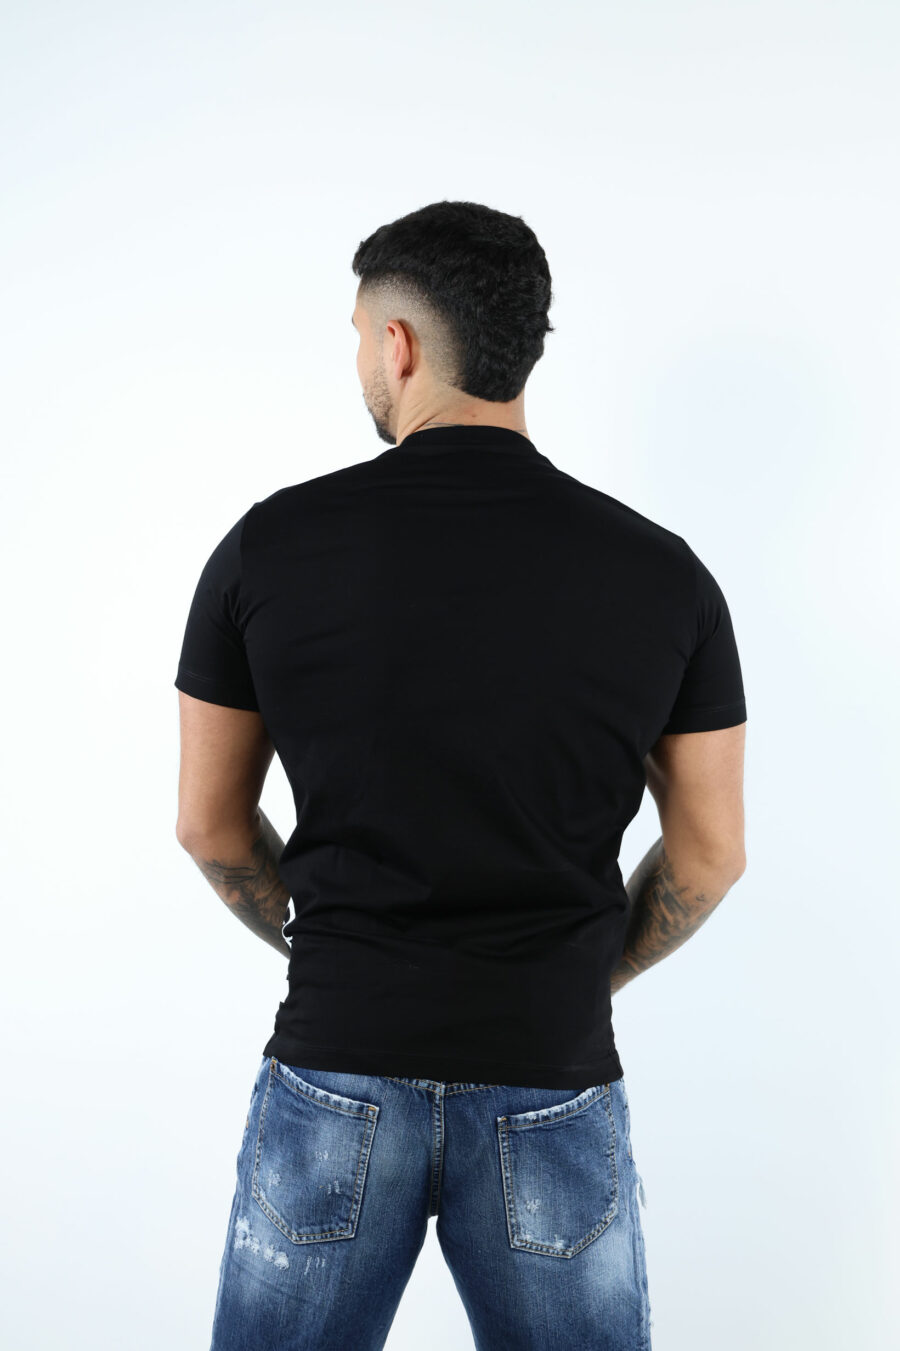 Schwarzes T-Shirt mit schwarzem verzerrtem Bass-Maxilogo - 106827